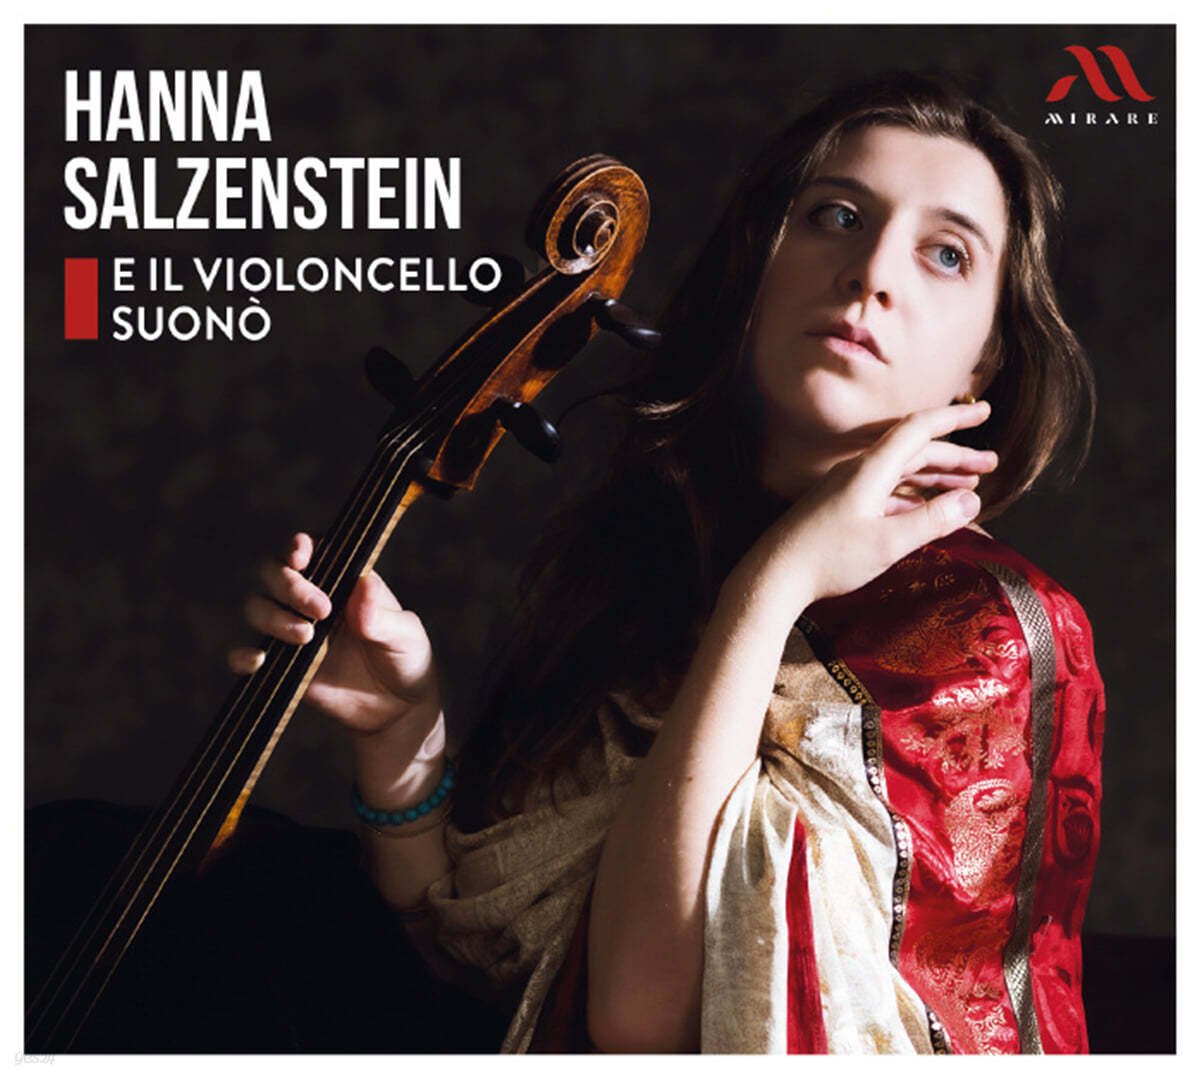 Hanna Salzenstein 18세기 빛나는 첼로 명곡 모음집 (É Il Violoncello Suonò)